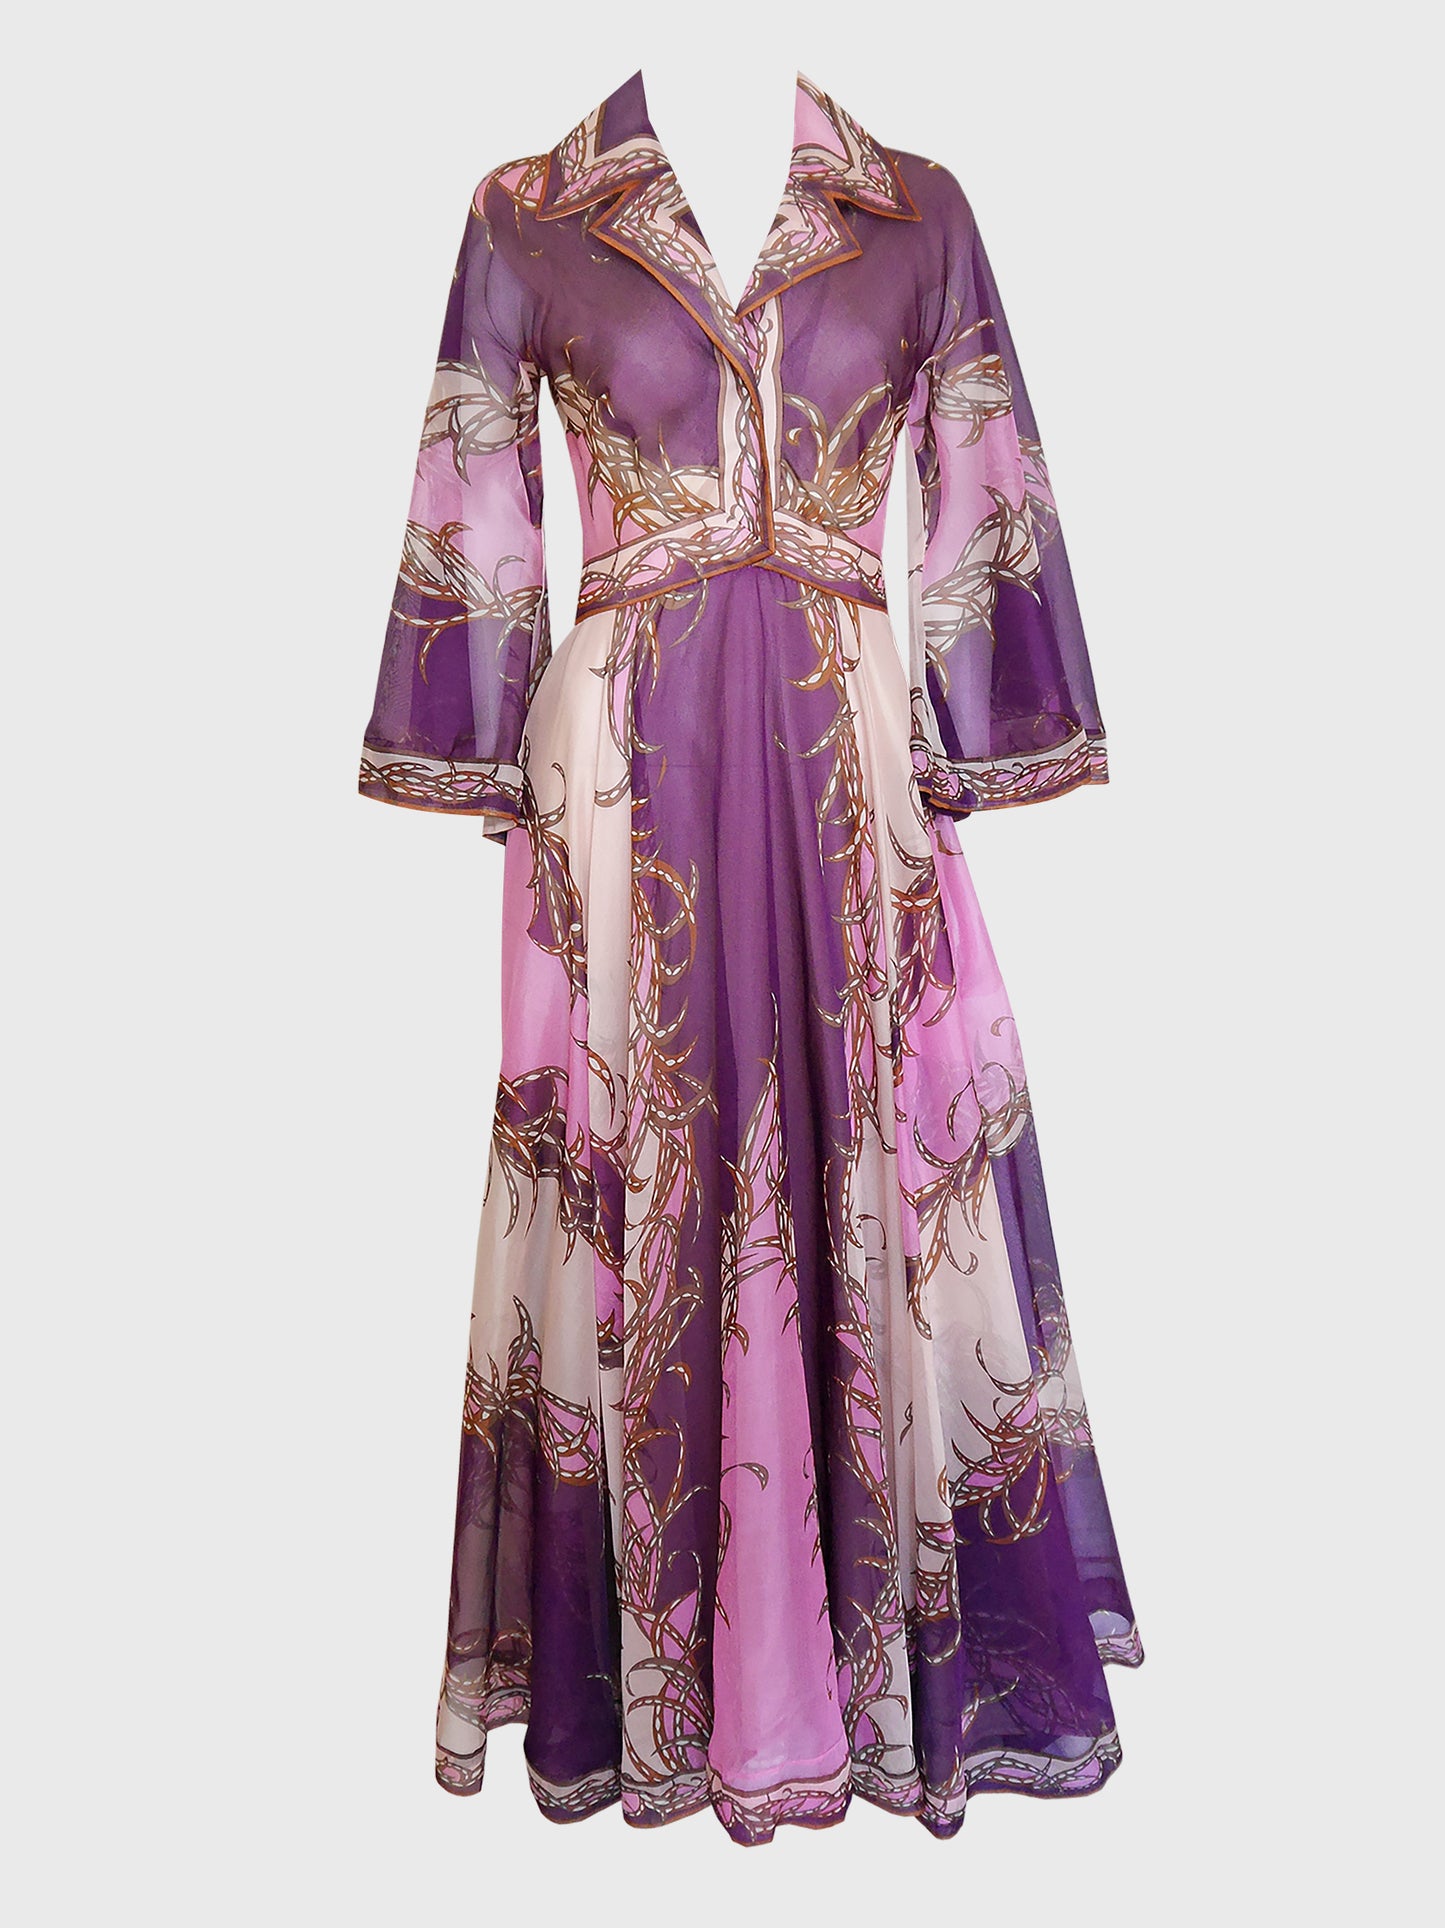 EMILIO PUCCI c. 1973 Vintage Silk Organza Evening Dress